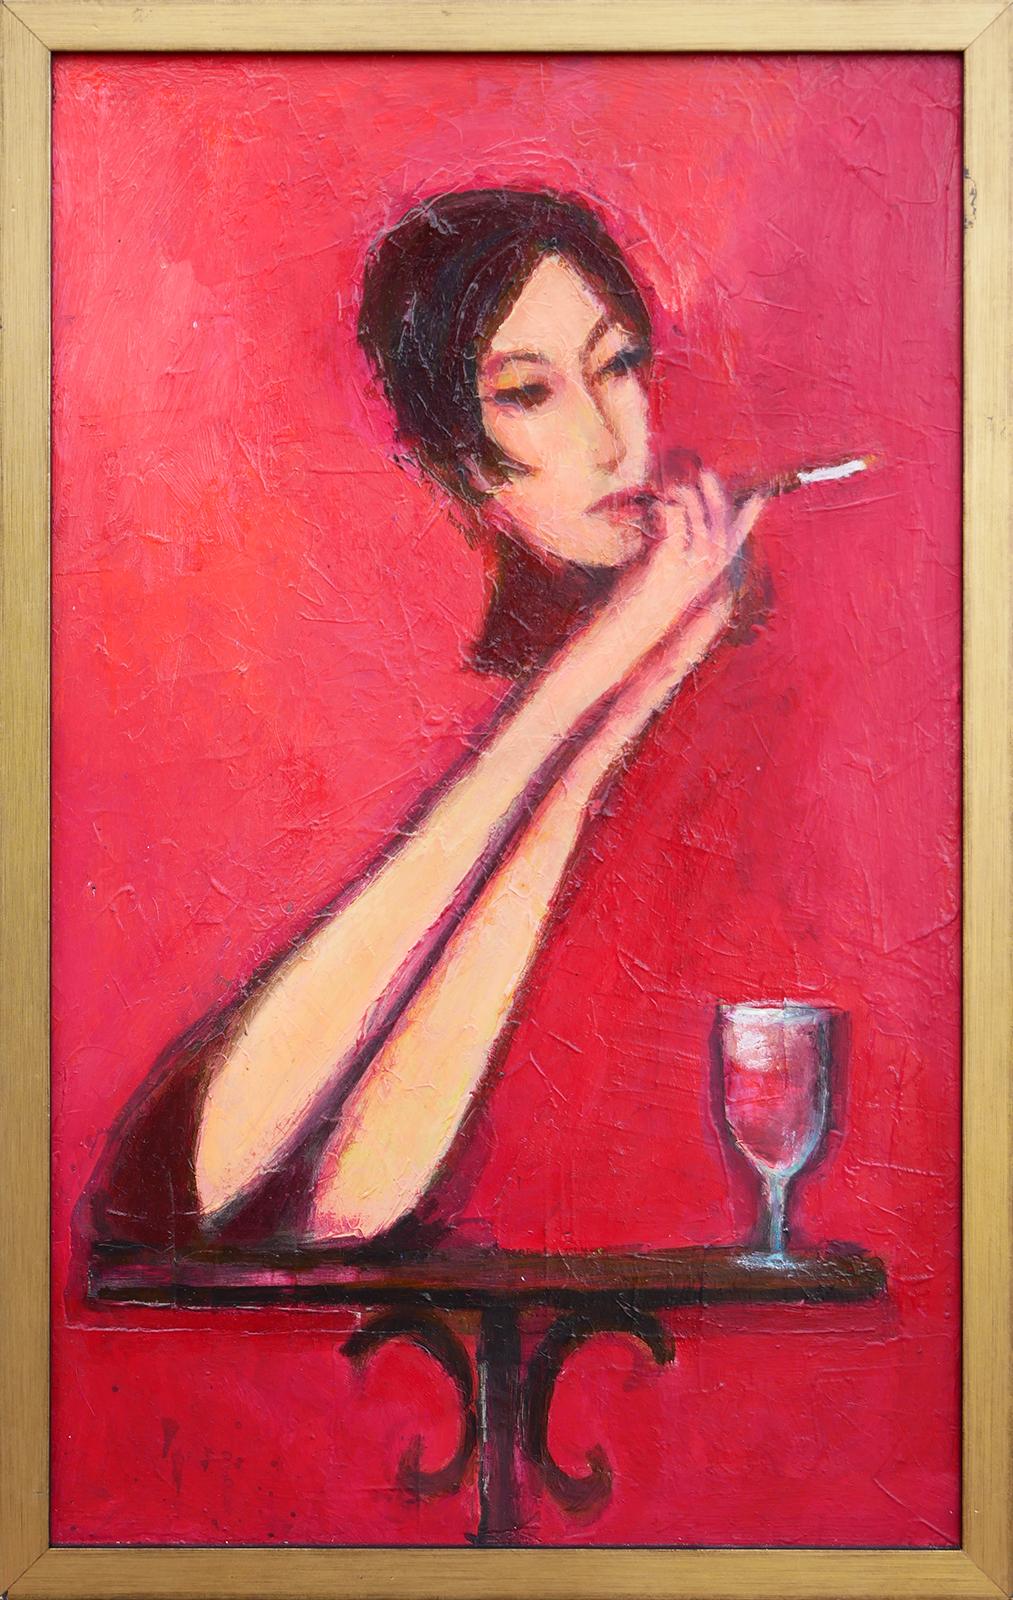 Figurative Painting David Adickes - Lady with Cigarette - Peinture figurative abstraite aux tons rouges